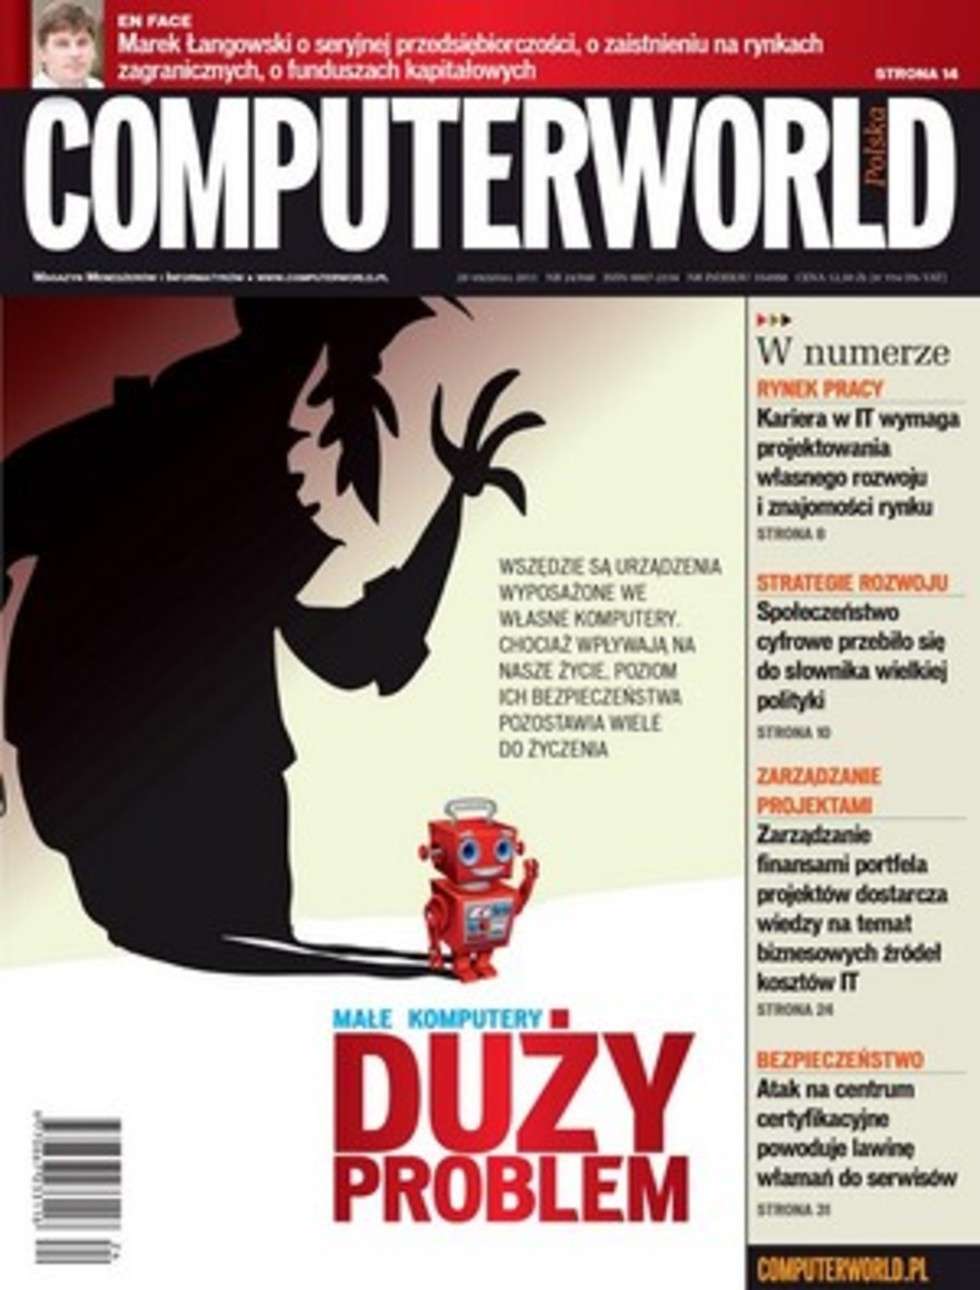  ArtFront Czasopisma komputerowe: "Computerworld" nr 24